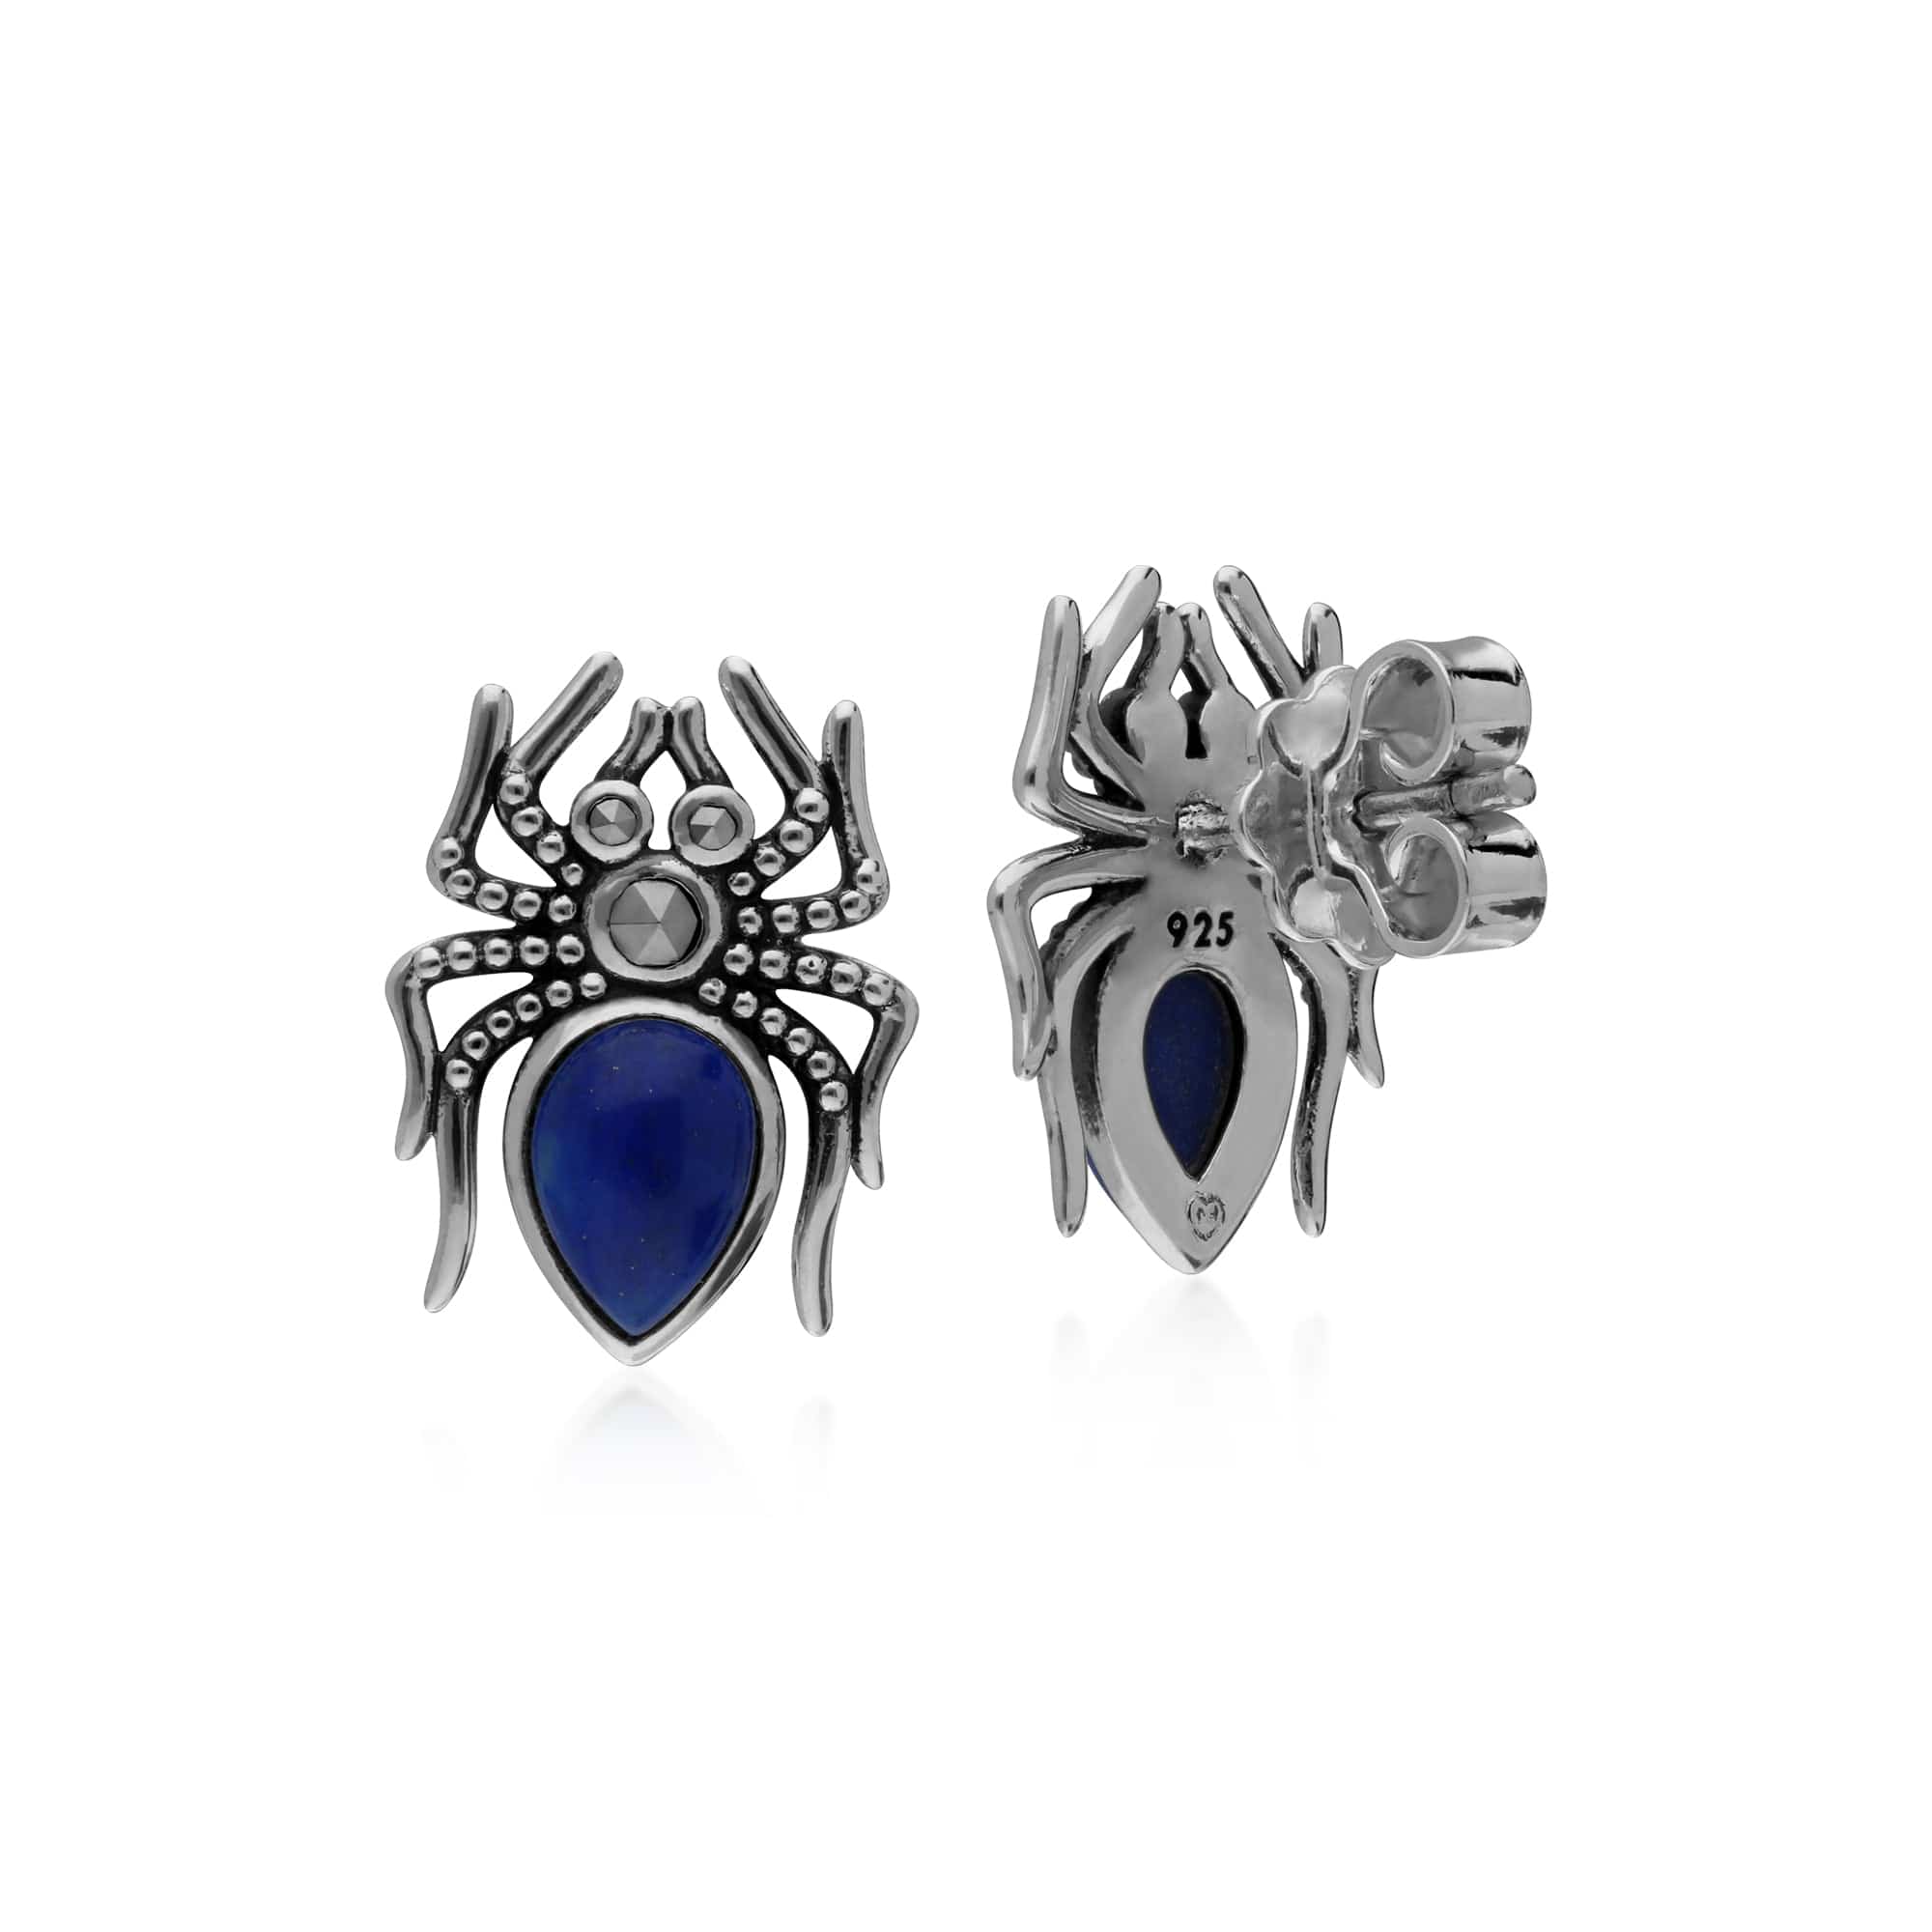 214E863901925 Gemondo Sterling Silver Lapis Lazuli & Marcasite Spider Stud Earrings 2